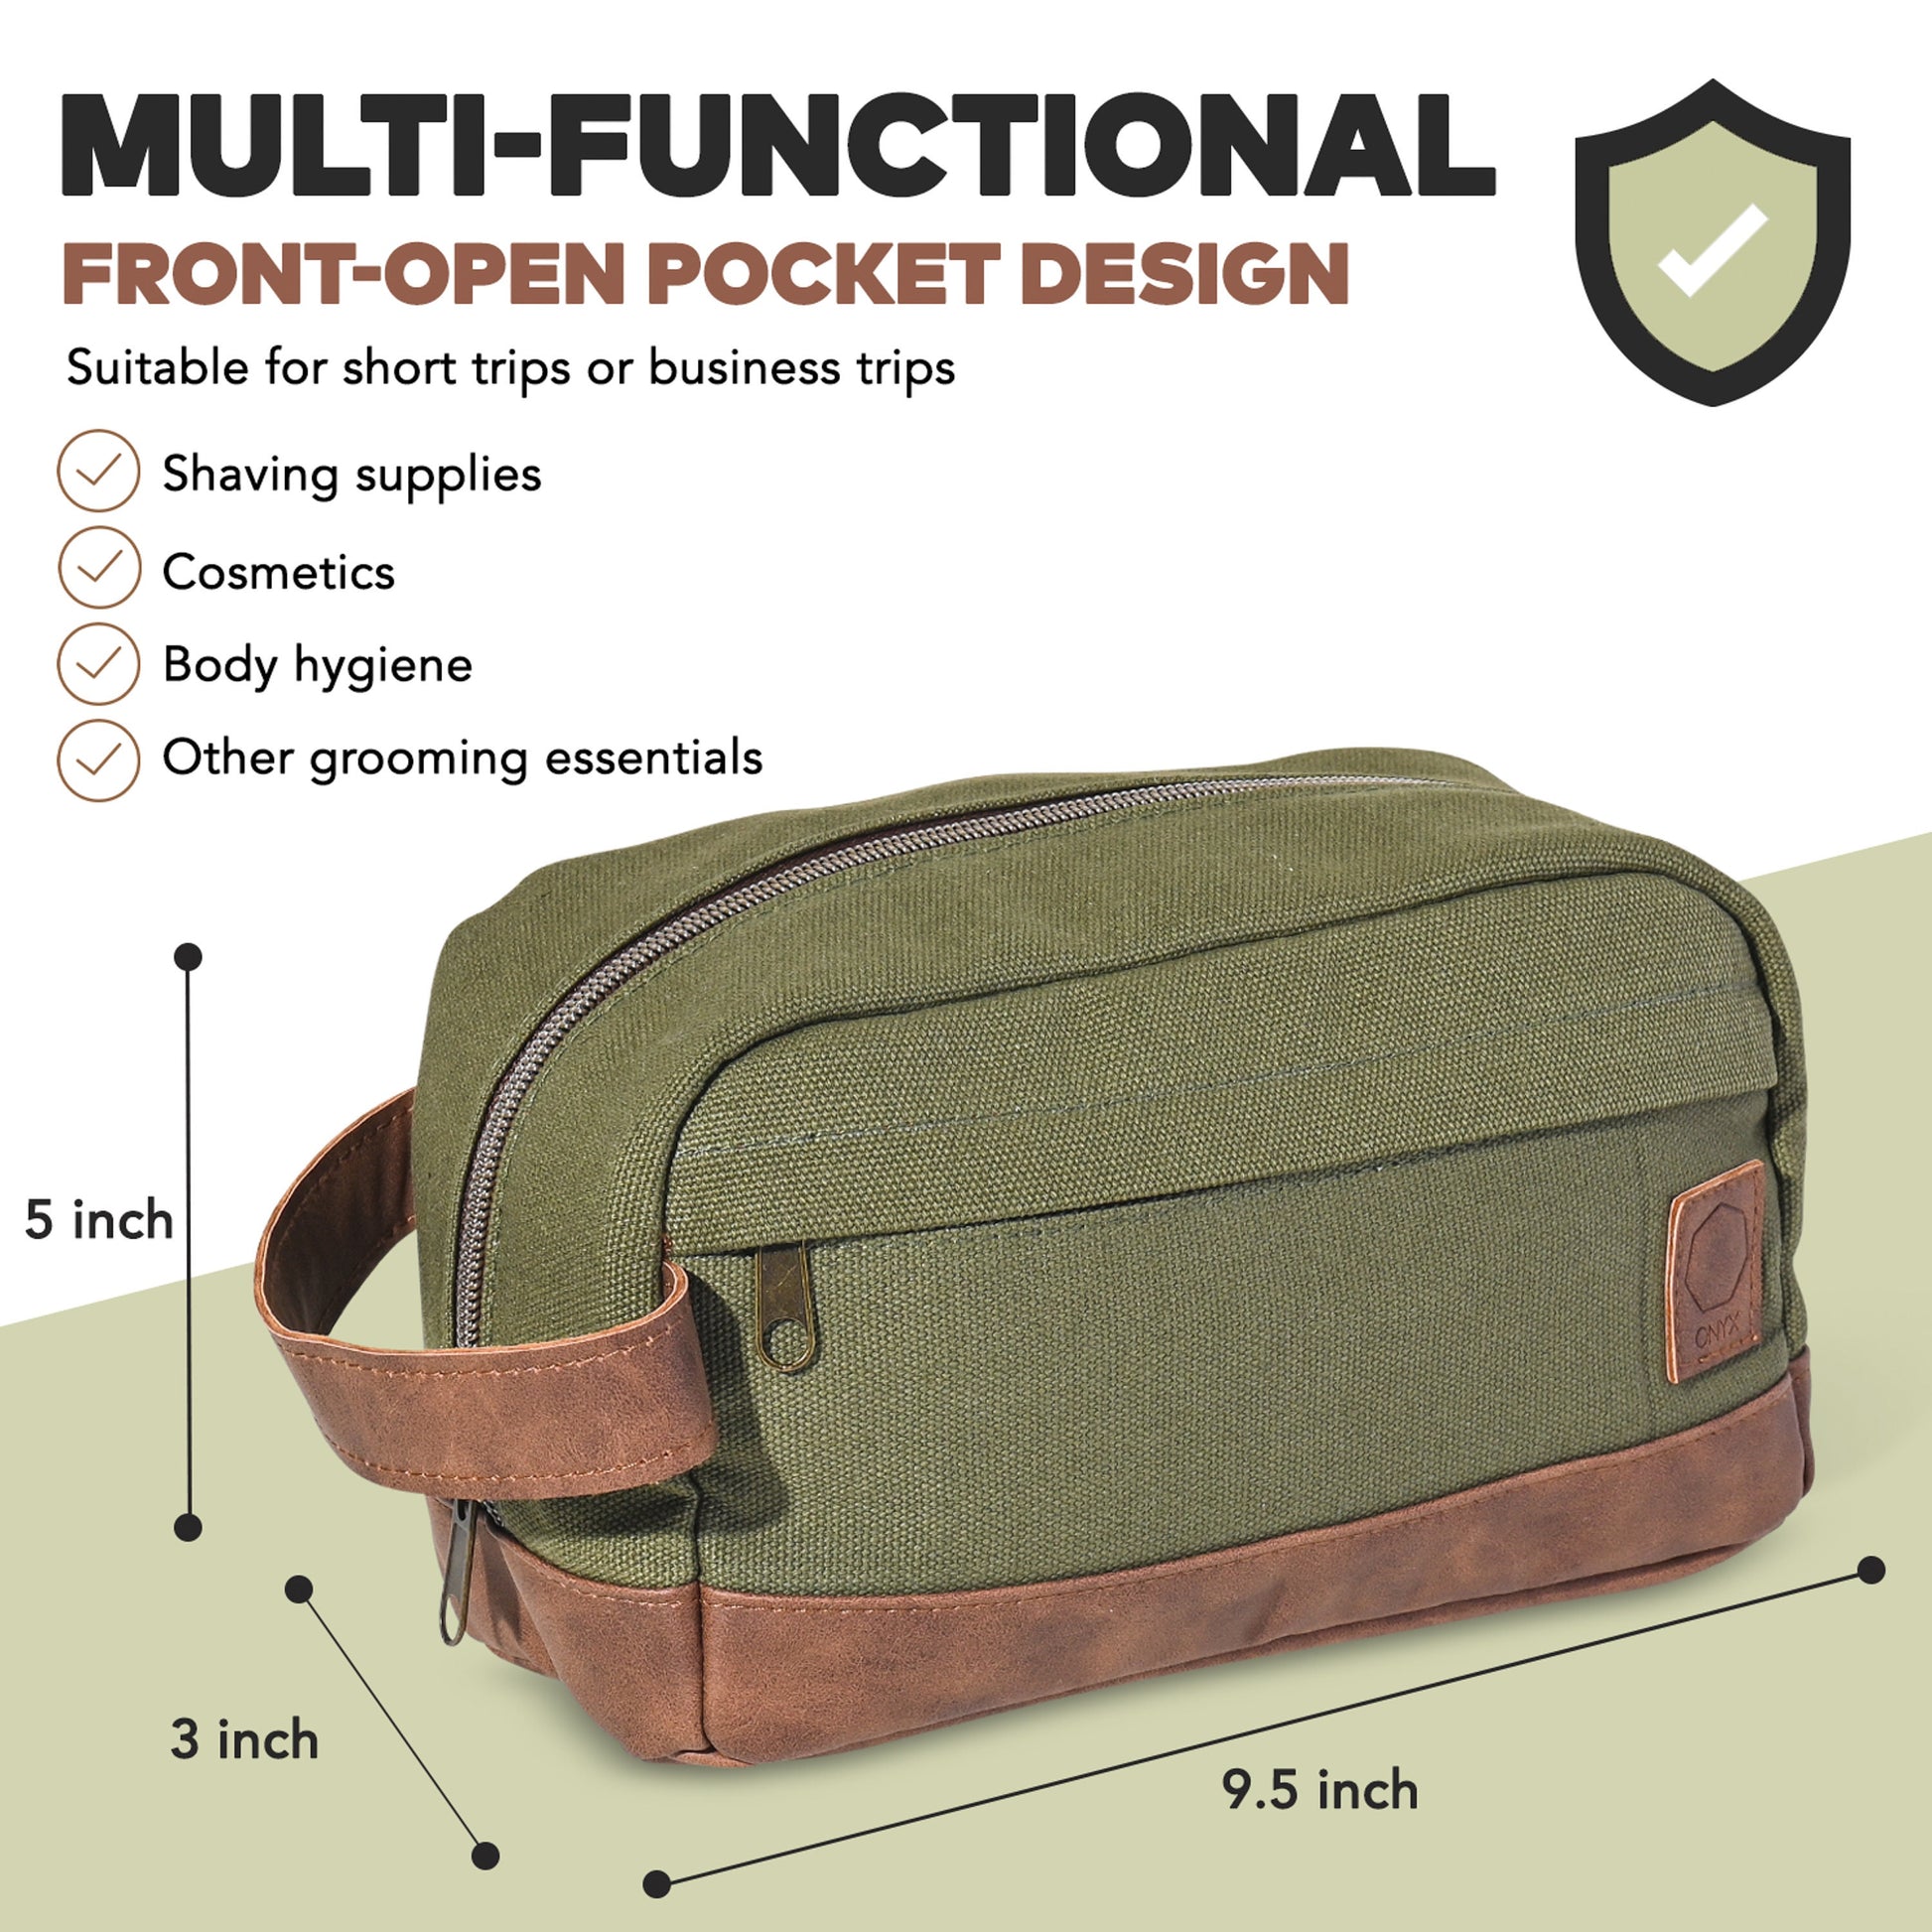 Women's Toiletry Bag Travel Bag with Hanging Hook and Mens Toiletry Bag - Travel Bag - Dopp kit - Shave Bag Bundle